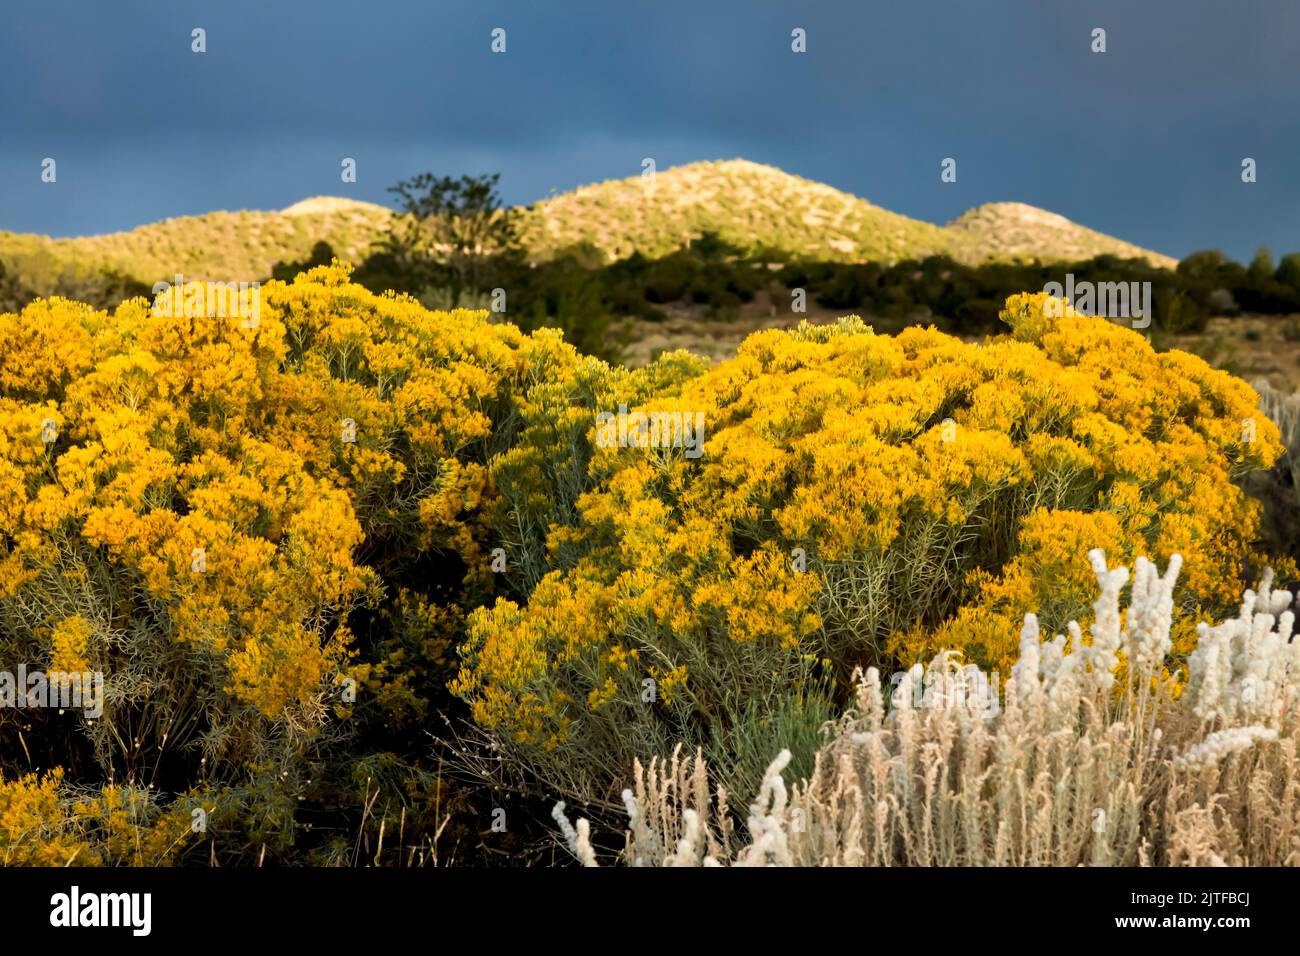 Santa Fe, New Mexico, United States. Fall landscape. Stock Photo